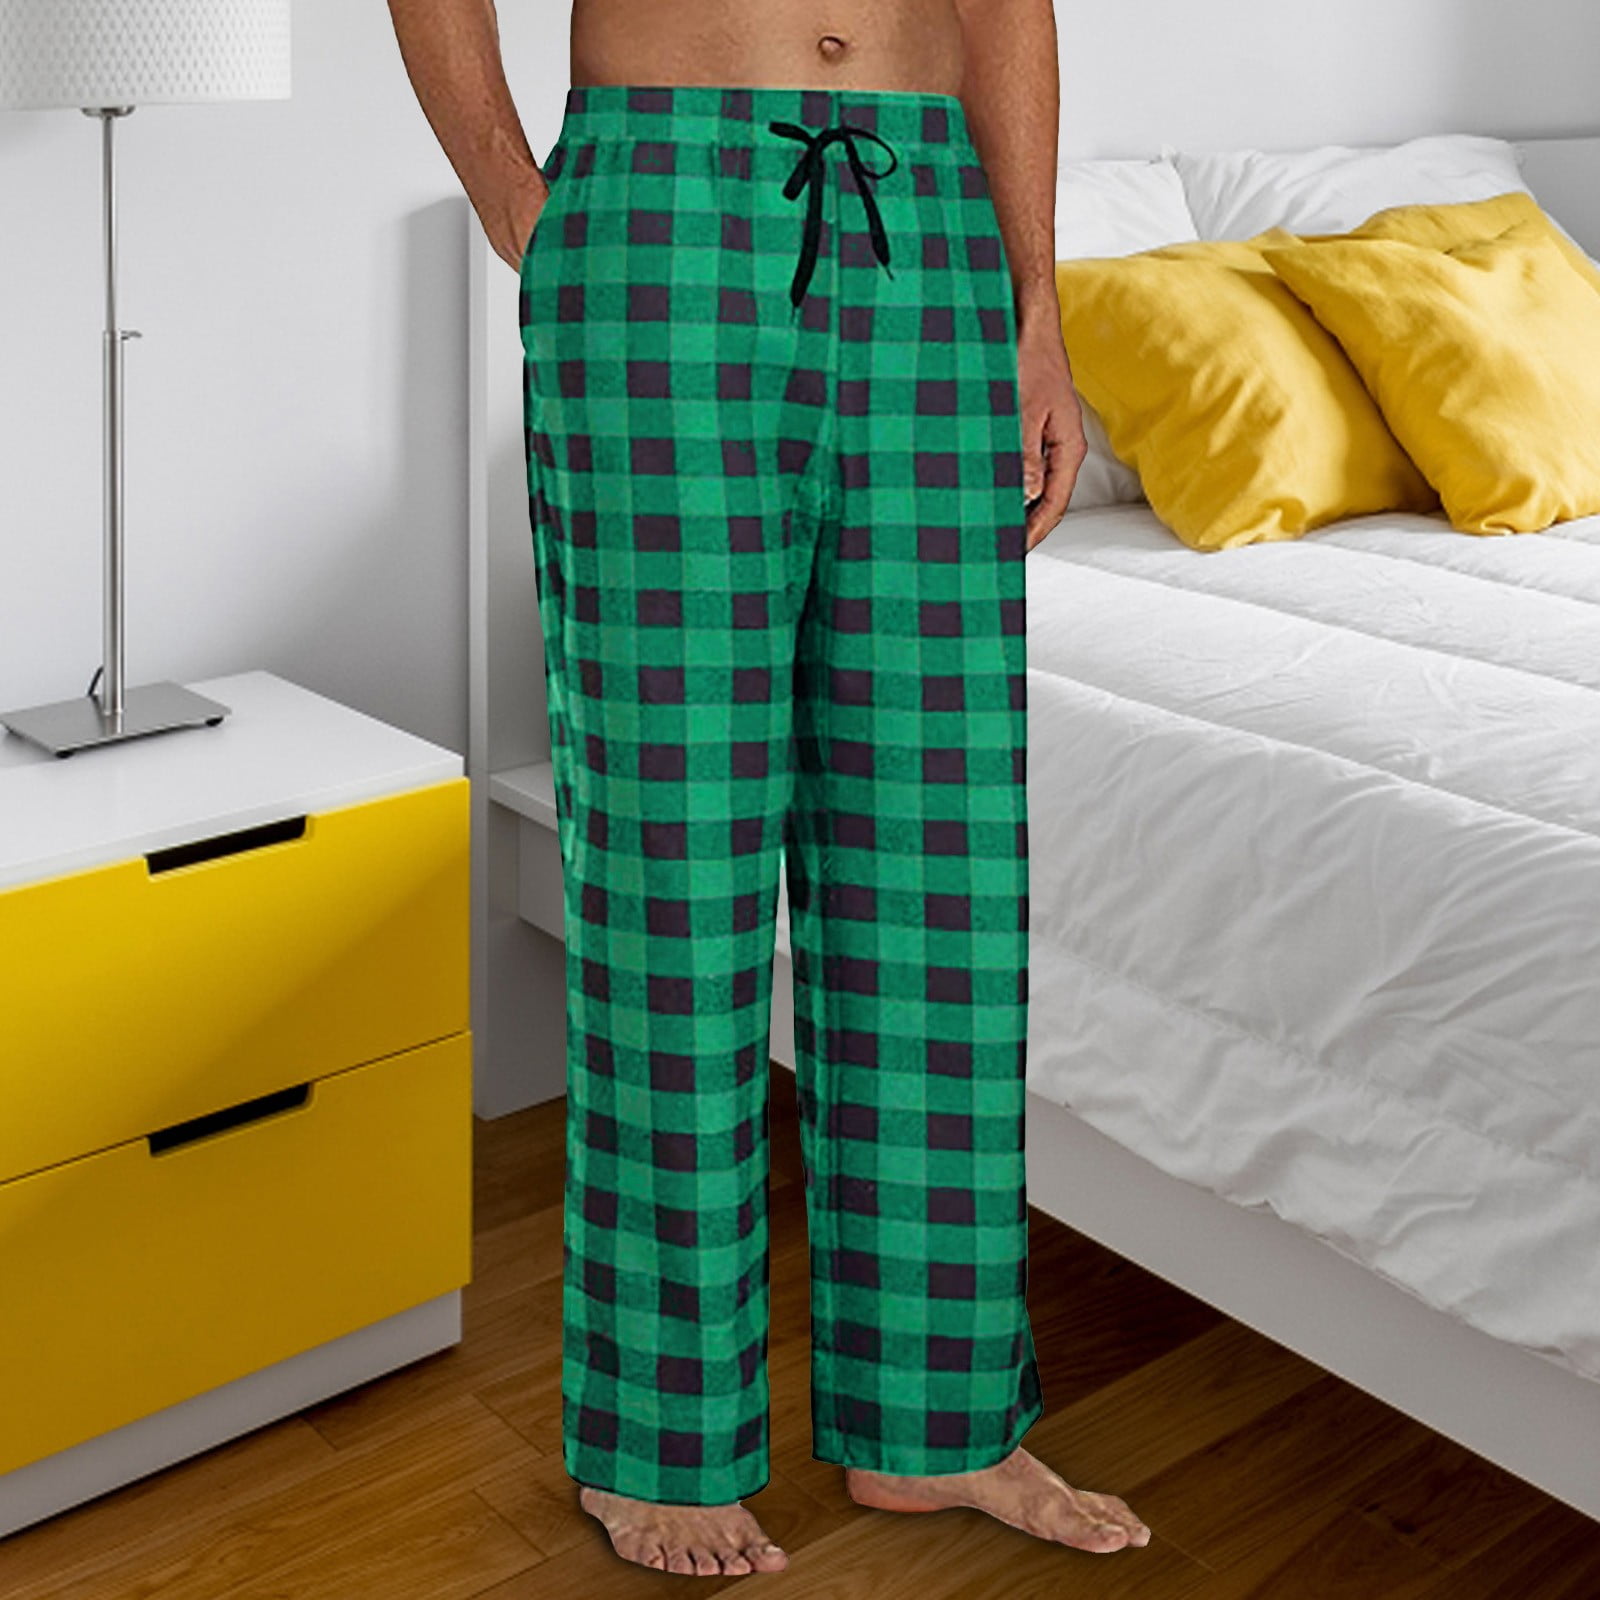 Lisingtool Pants for Men Mens Pajamas Plaid Pajama Pants Sleep